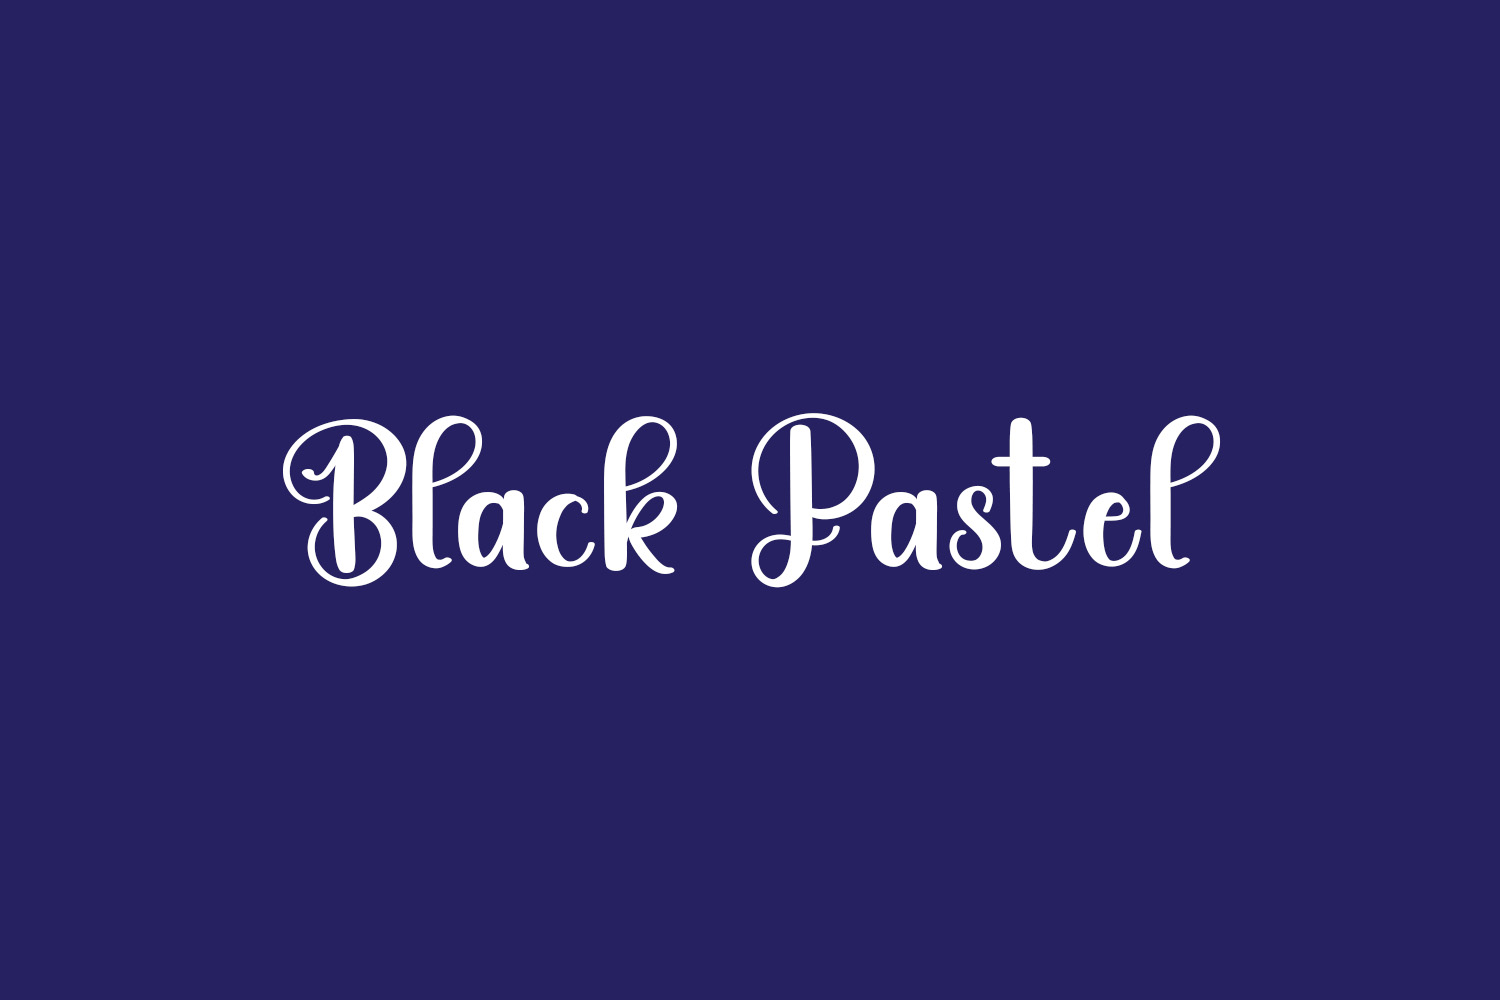 Black Pastel Free Font